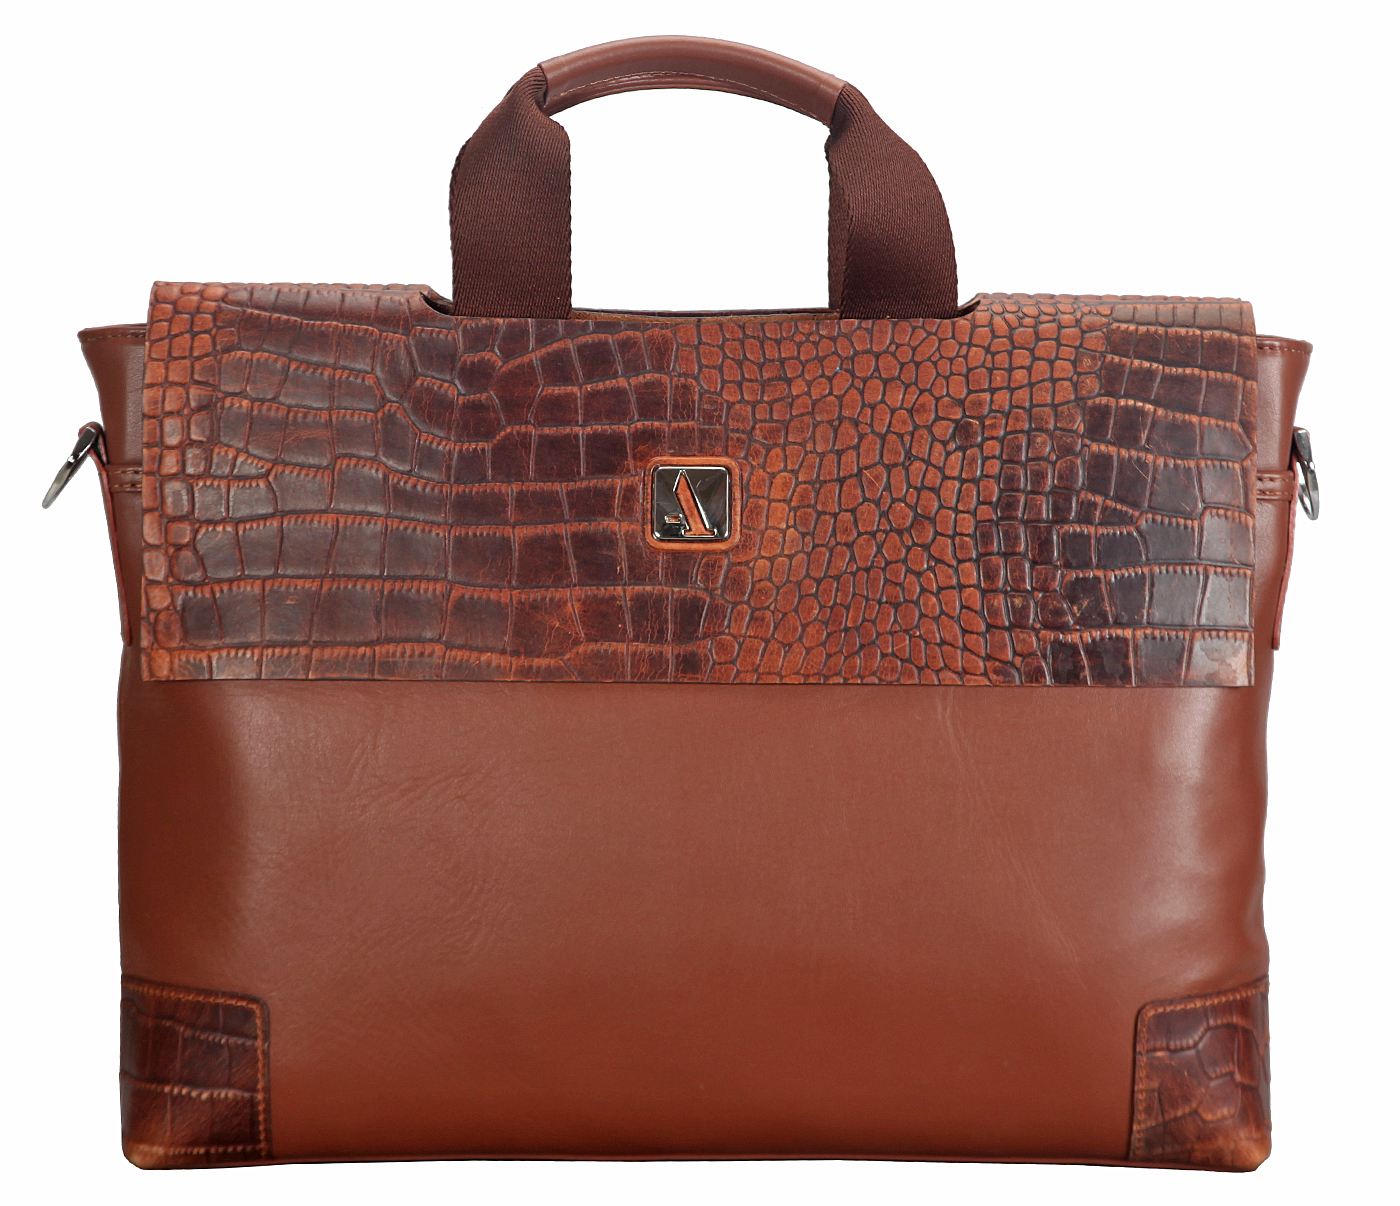 LC37-Ebner-Laptop, portfolio office executive bag in Genuine Leather - Tan/Brown